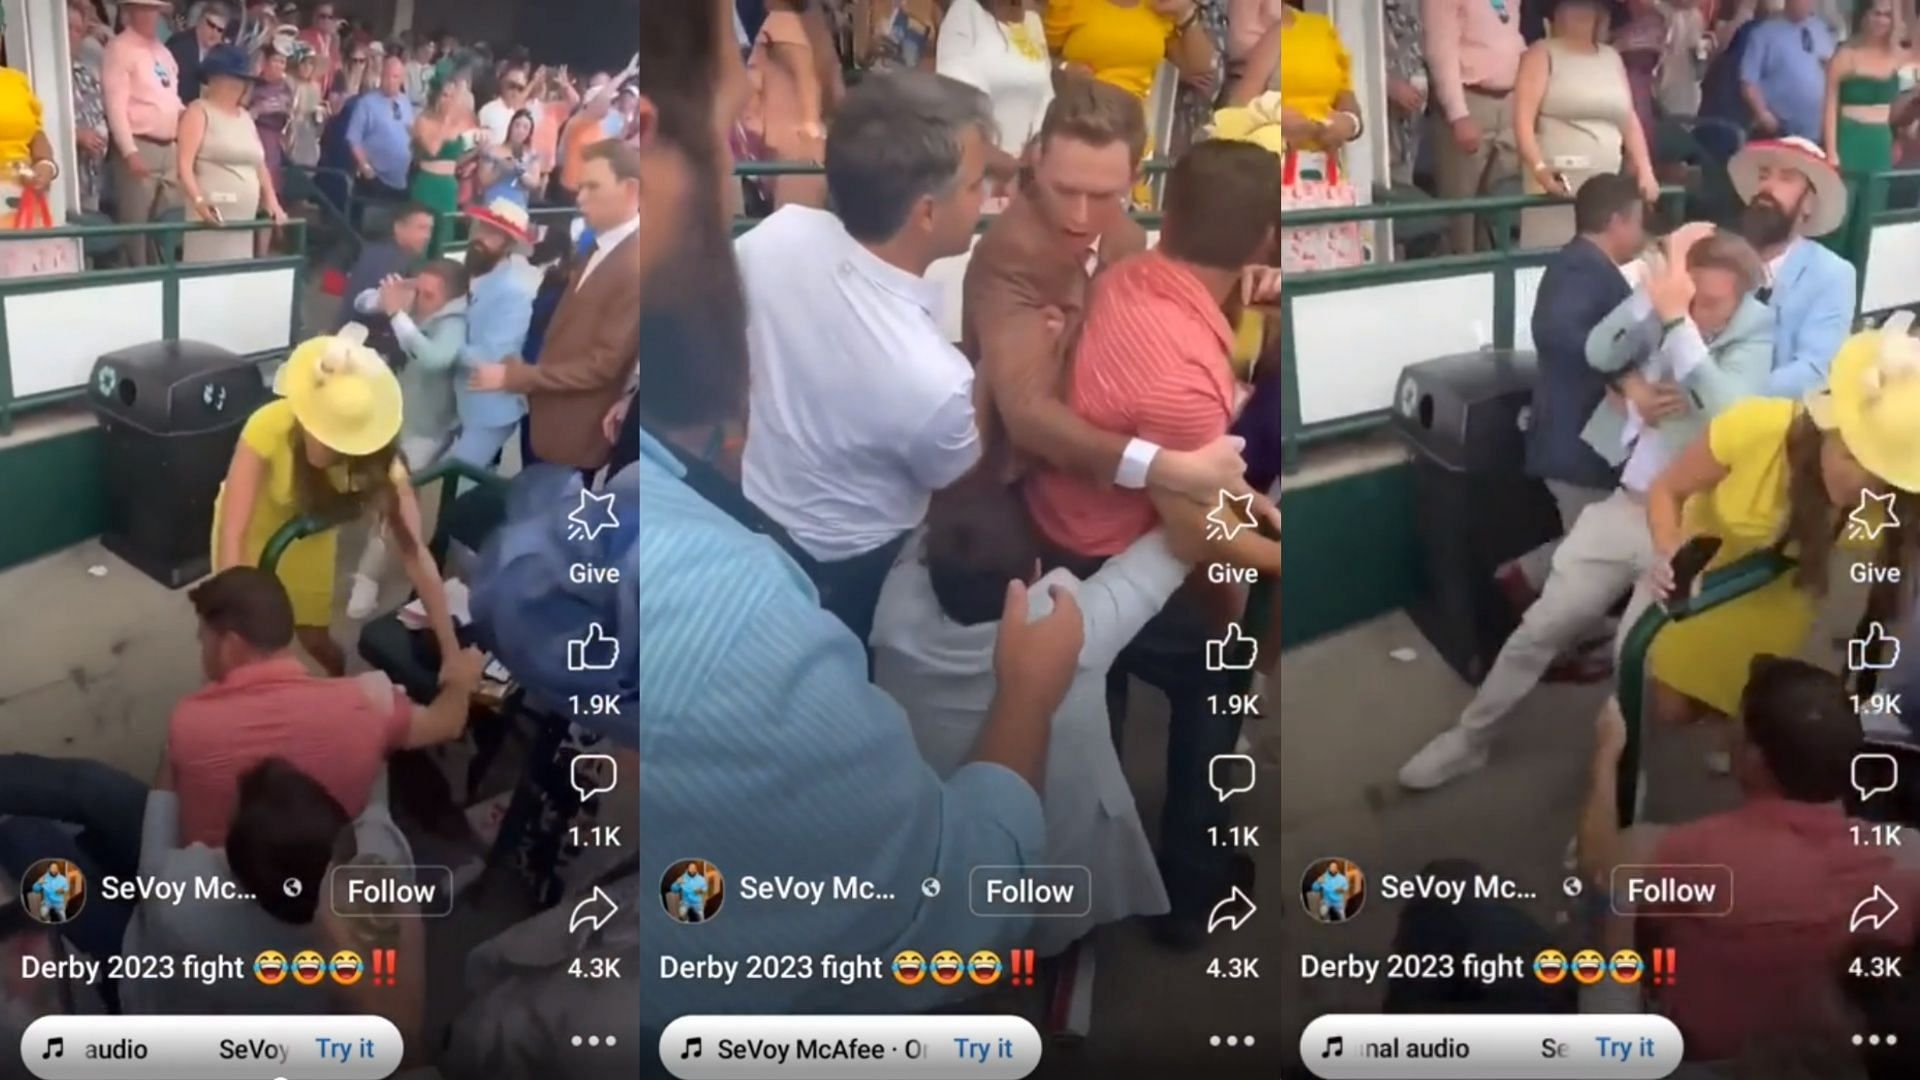 Kentucky Derby fight video leaves netizens stunned (Image via u/vinylskip/Reddit) 